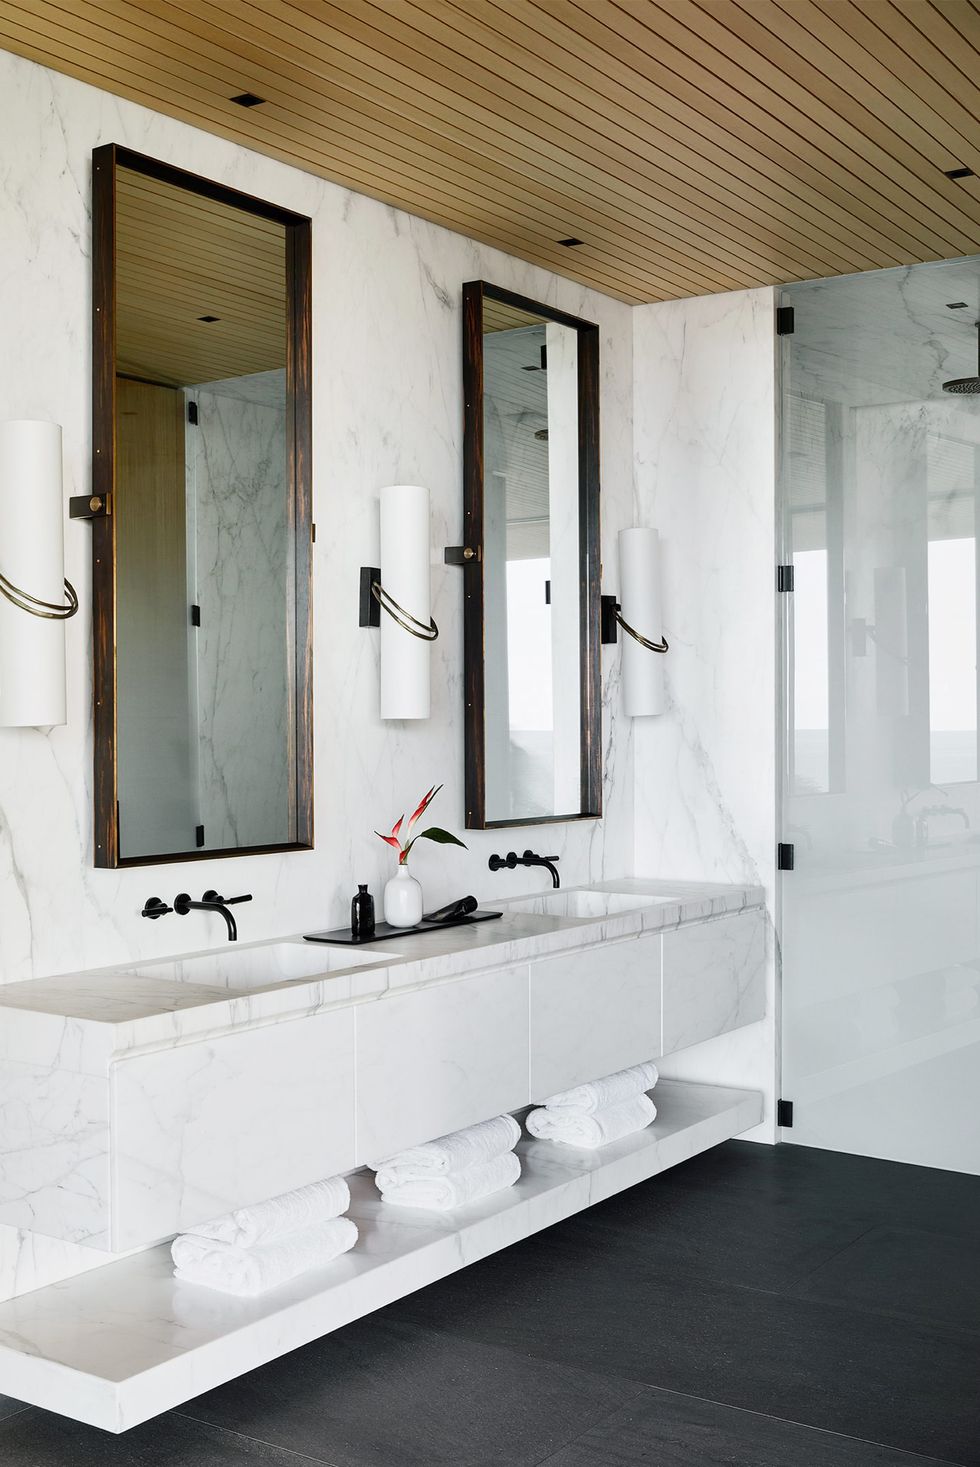 28 Stylish Bathroom Shelf Ideas - The Most Clever Bathroom Storage Solutions